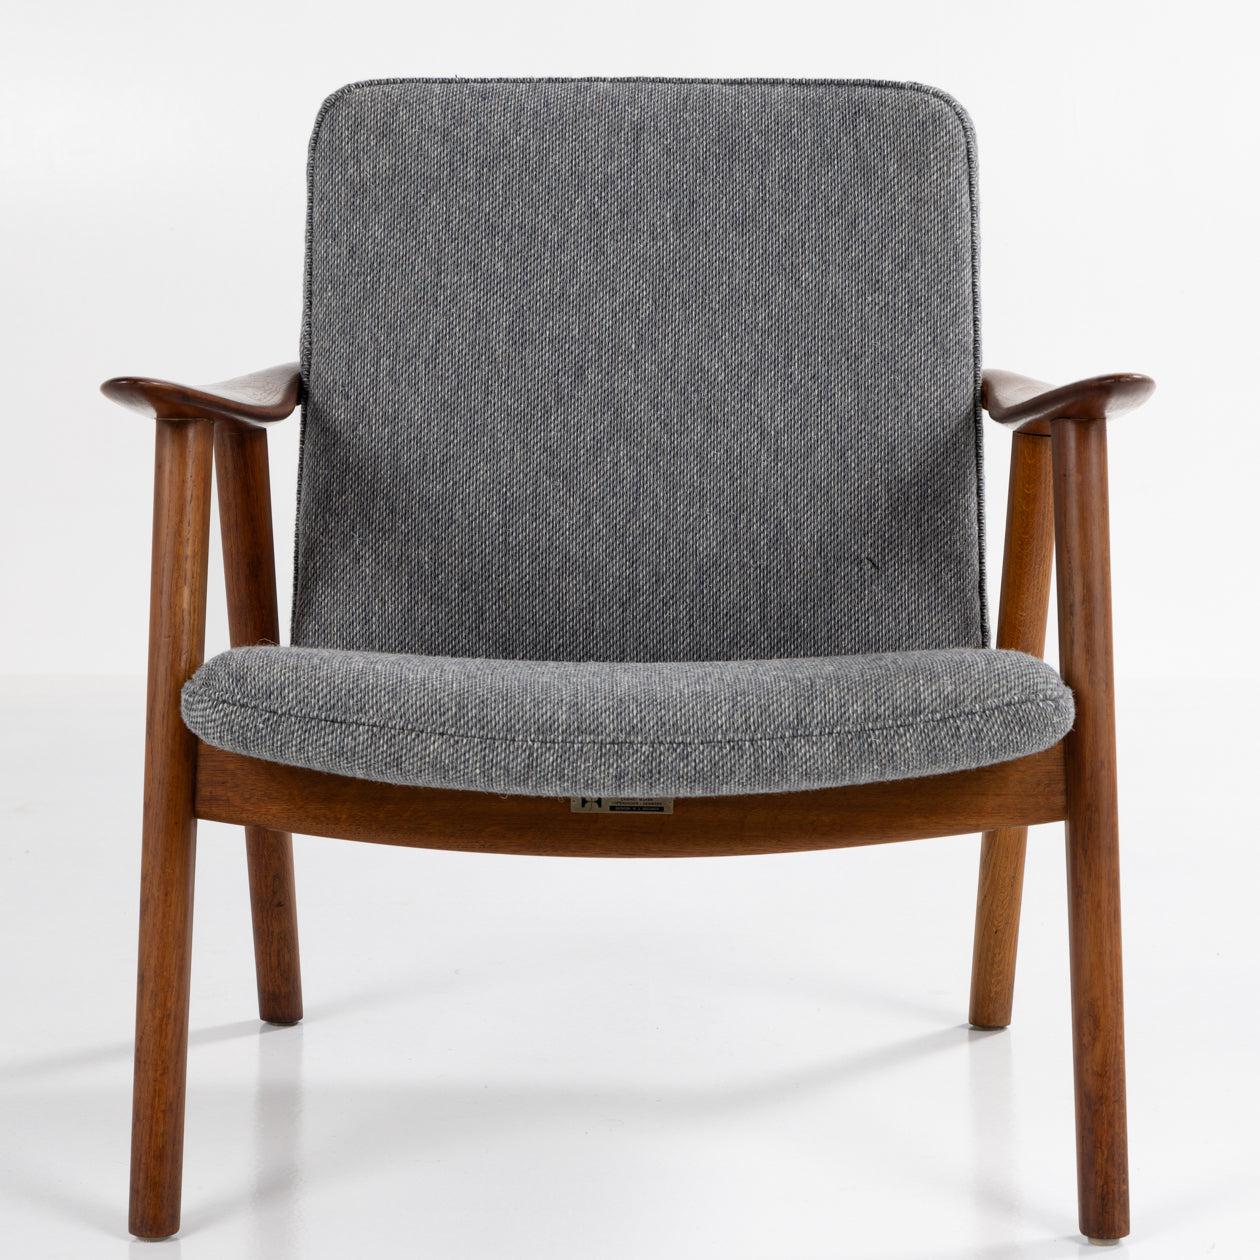 JH 517 - 'Buck Chair' in patinated teak and new textile from Kjellerup Væveri (COLOR 10-109) with manufacturer's label. Hans Wegner for master cabinetmaker Johannes Hansen.